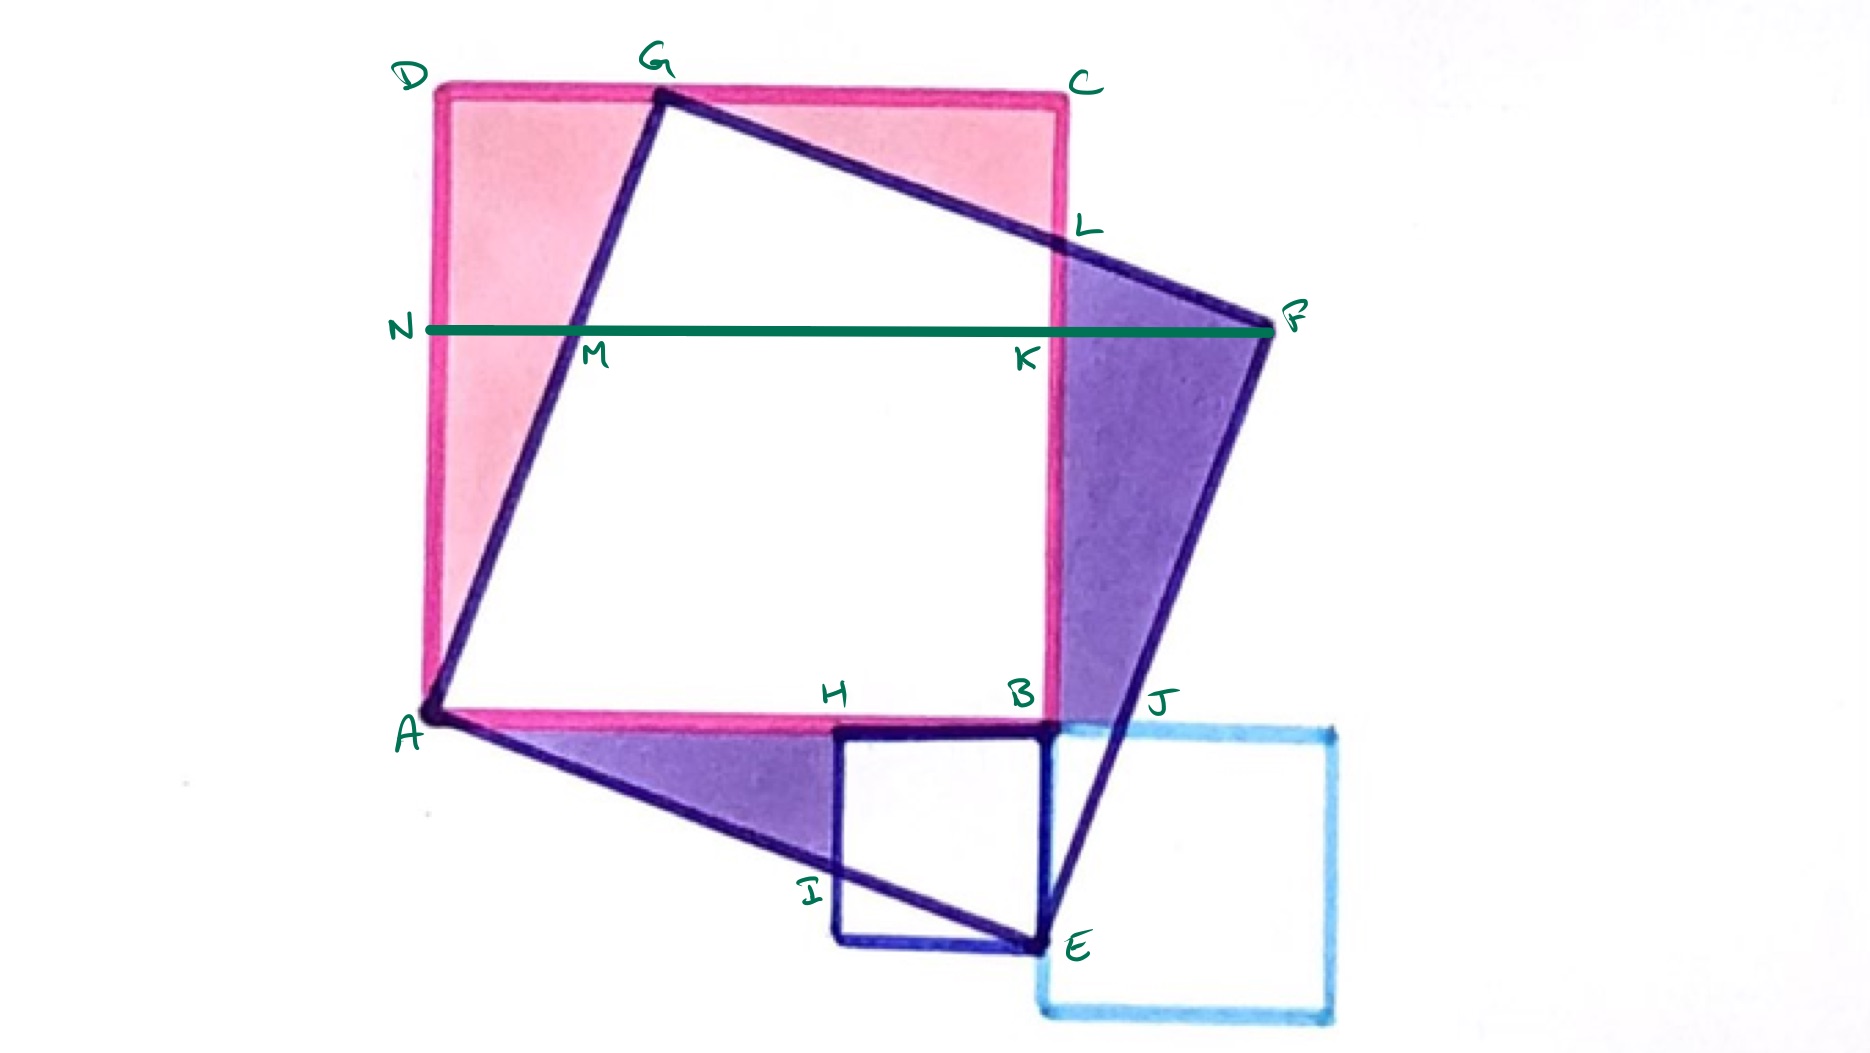 Four squares v labelled